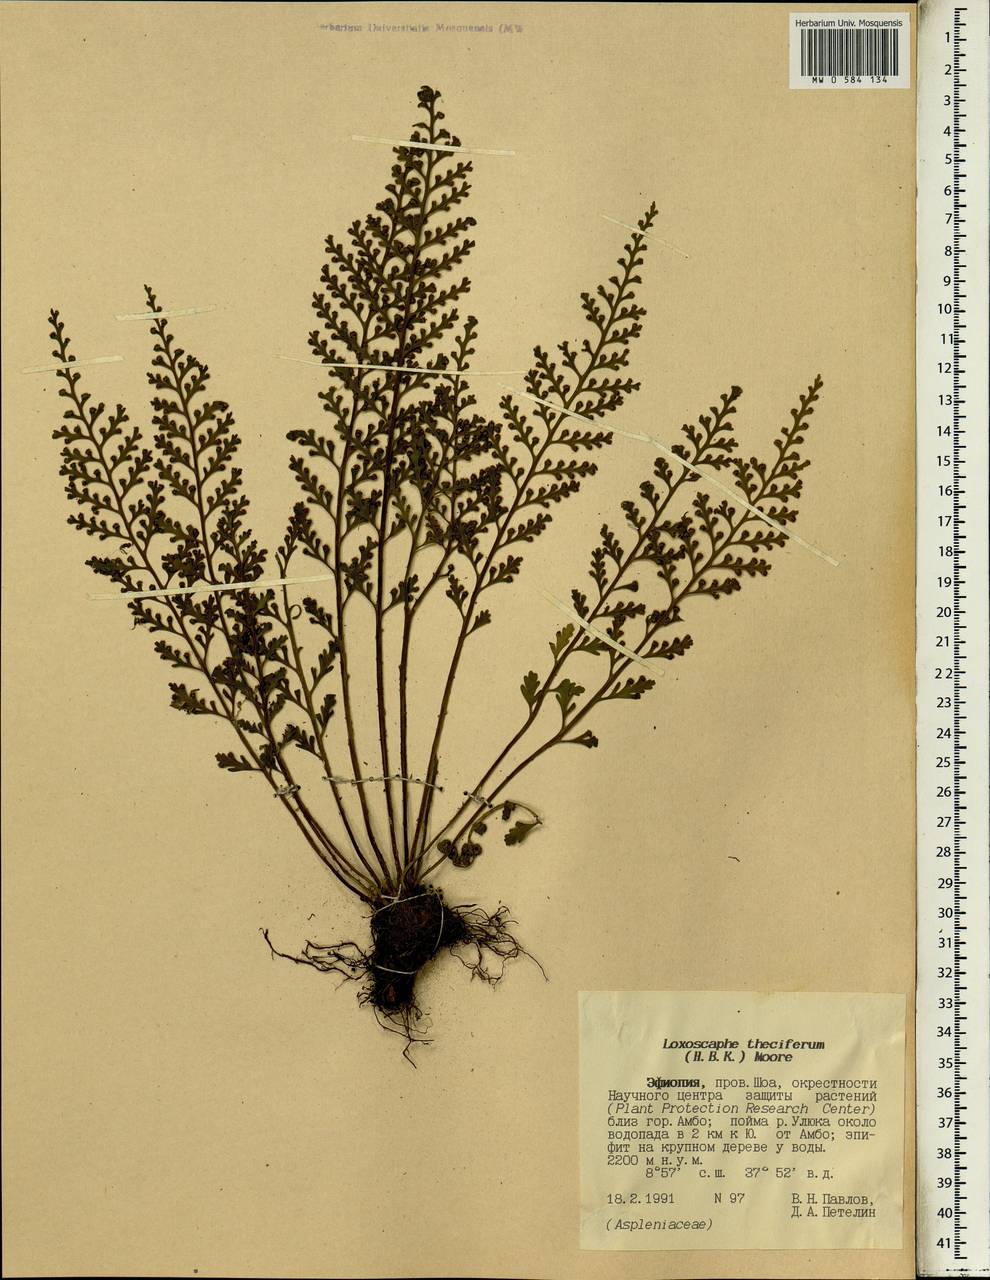 Asplenium theciferum (Kunth) Mett., Африка (AFR) (Эфиопия)